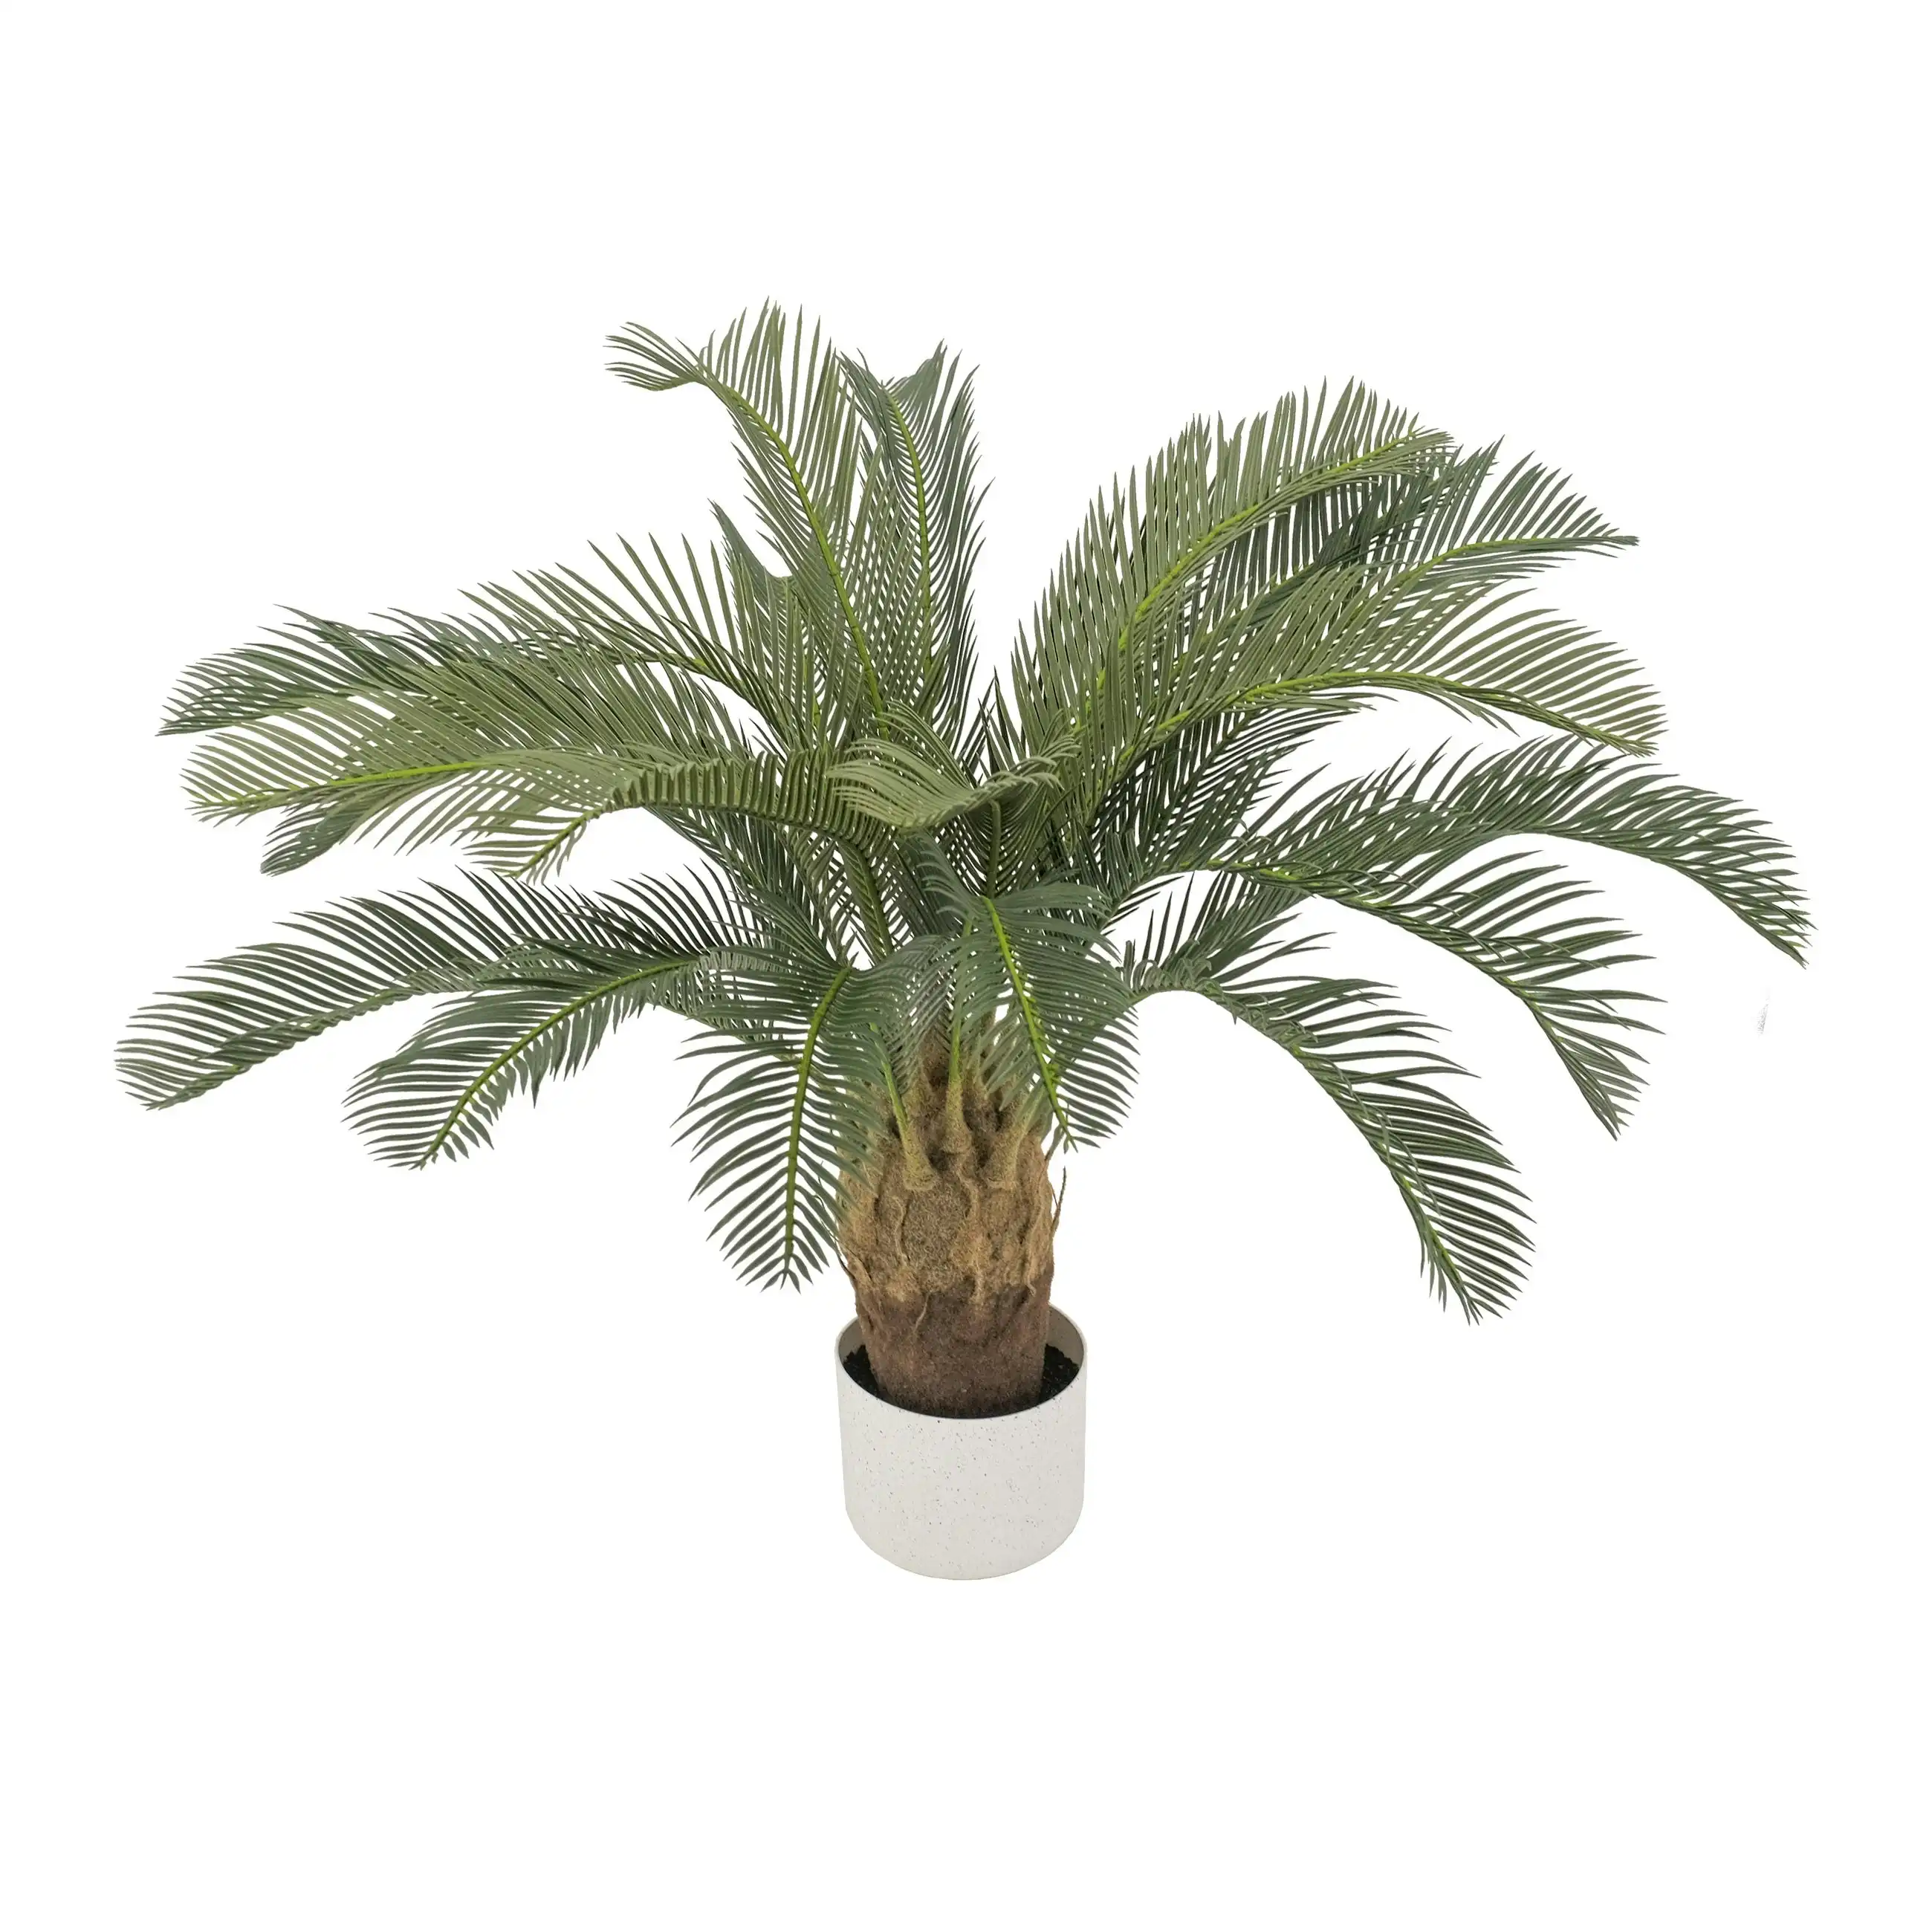 Artificial Cycad Palm Plant - 82cm